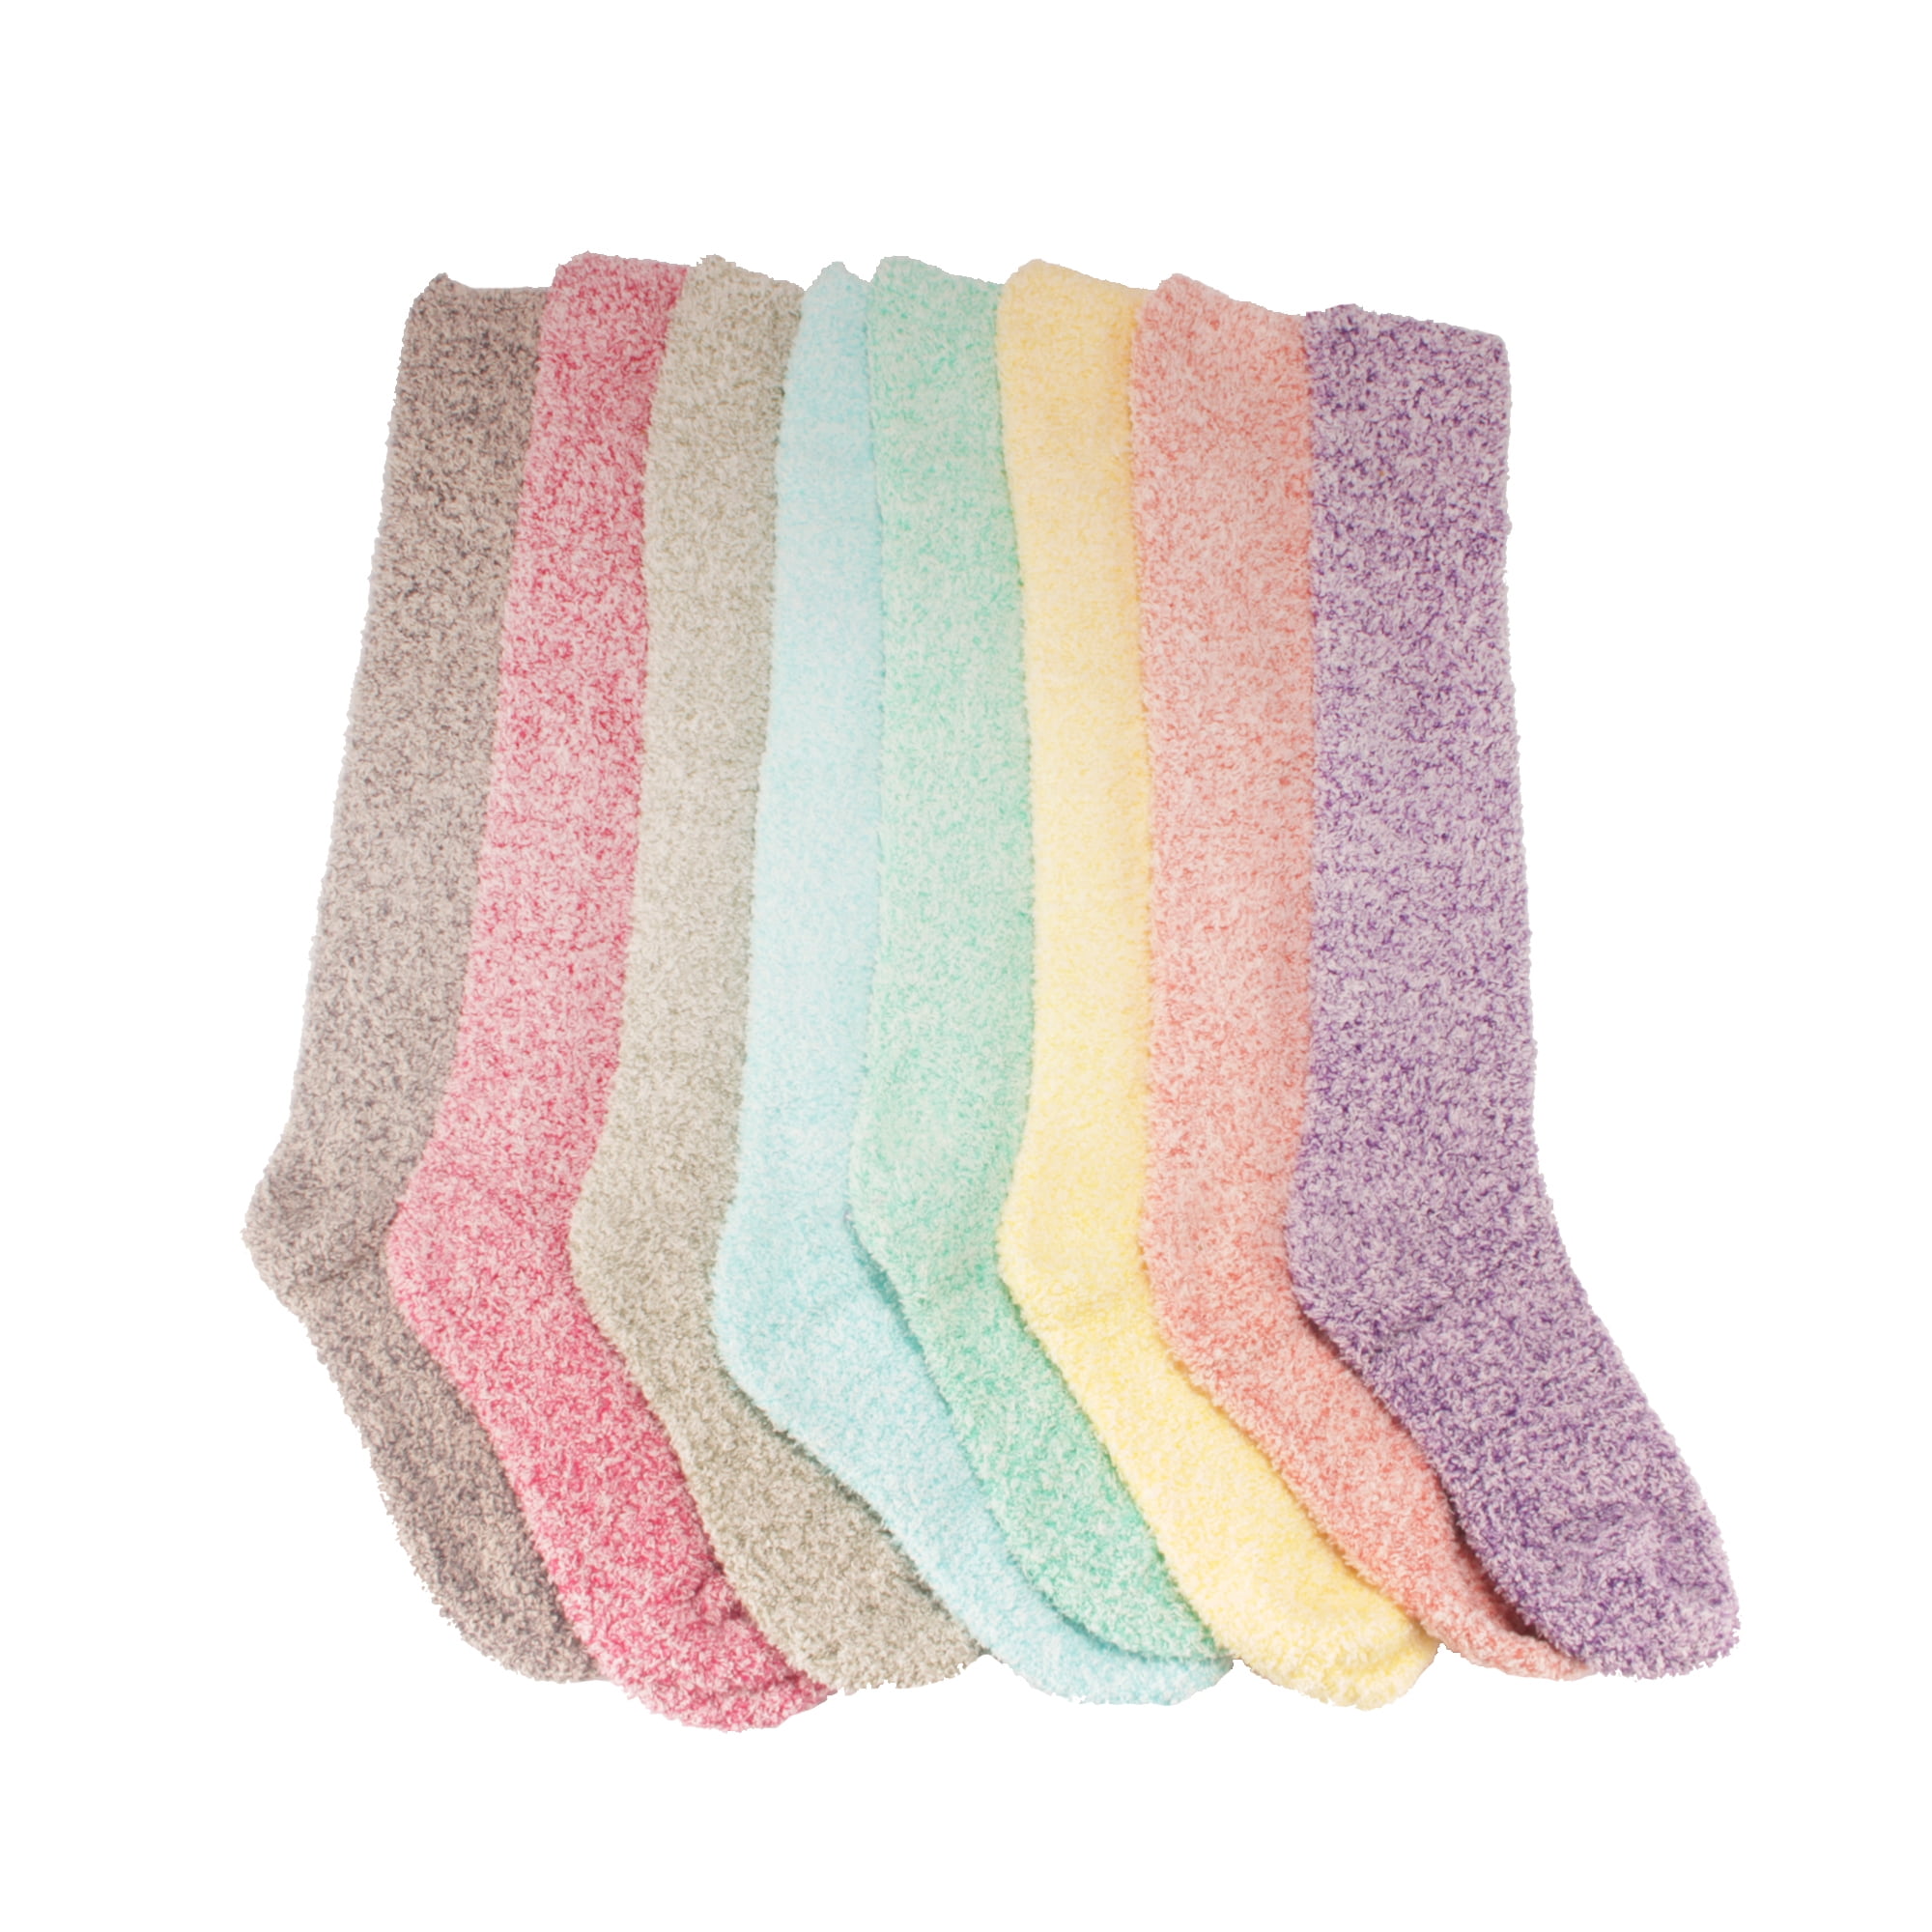 Women's Fuzzy Feather Soft Cozy Knee High Socks - Assortment 4A